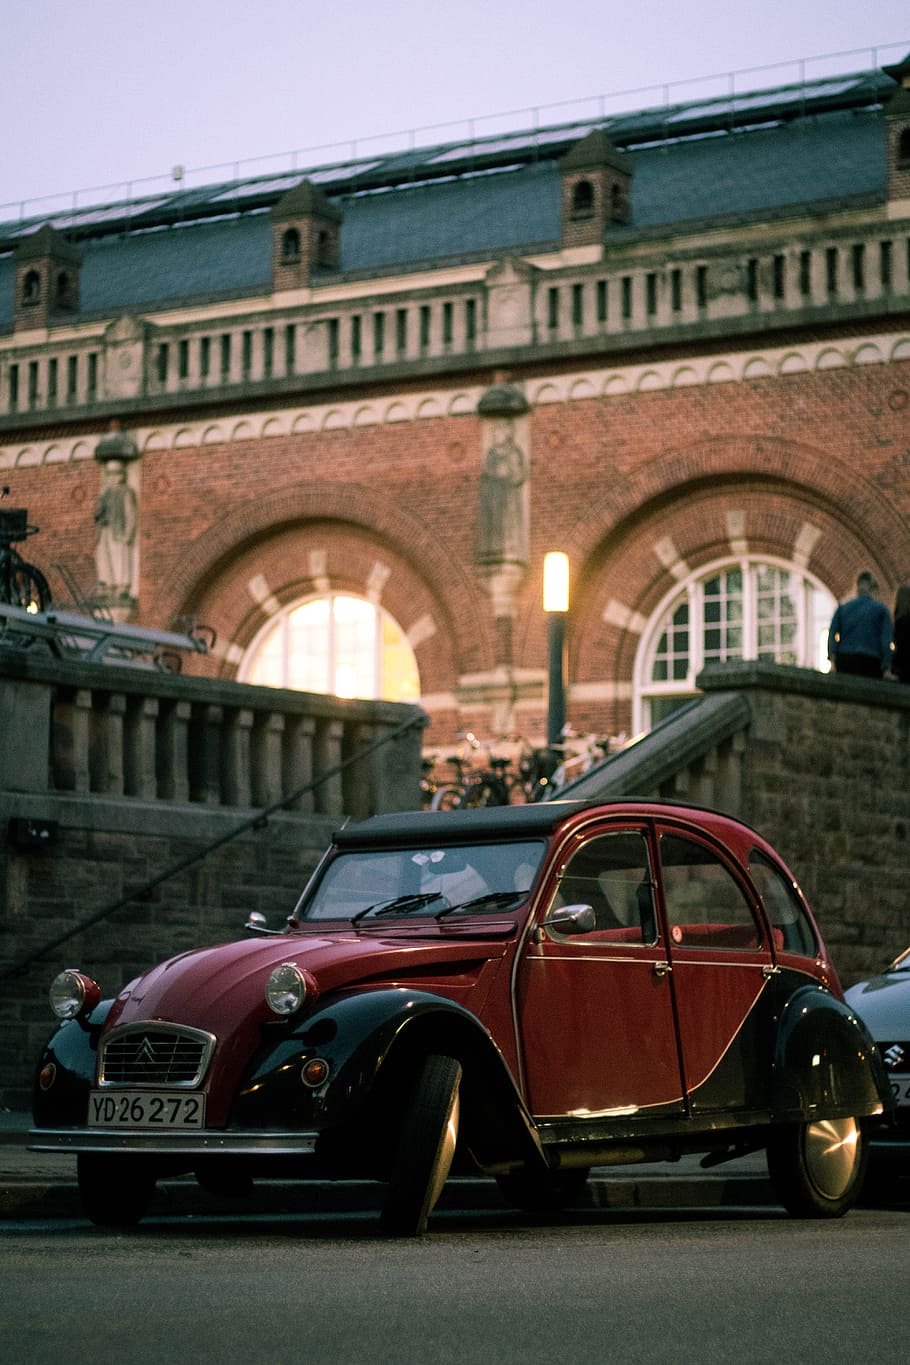 red, black, volkswagen beetle, parked, brown, building, car, street, old, vintage